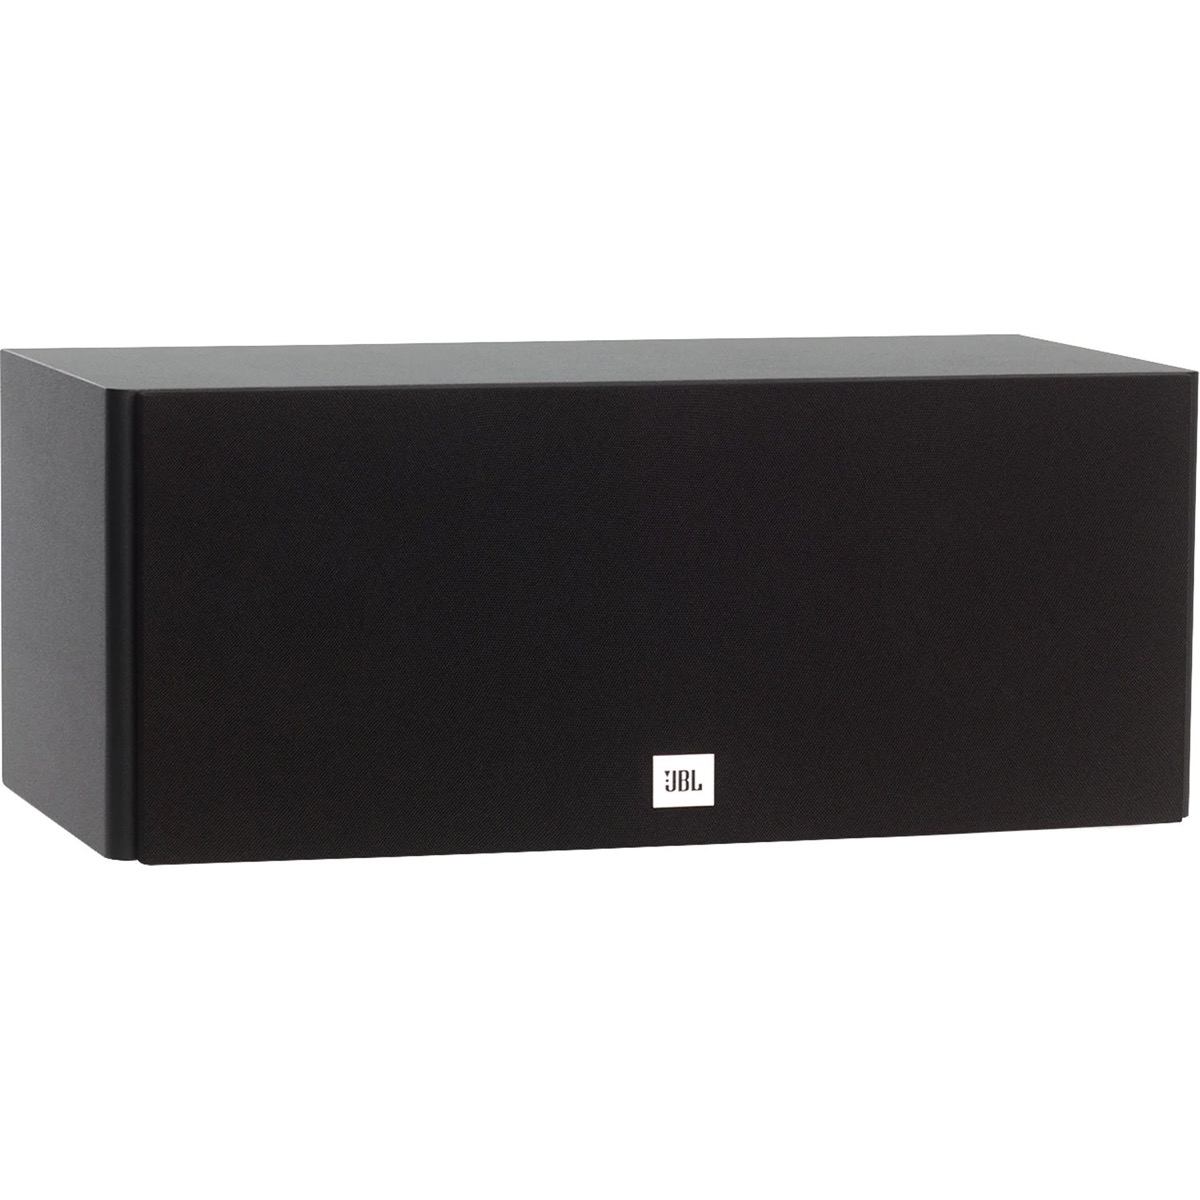 Black box speaker